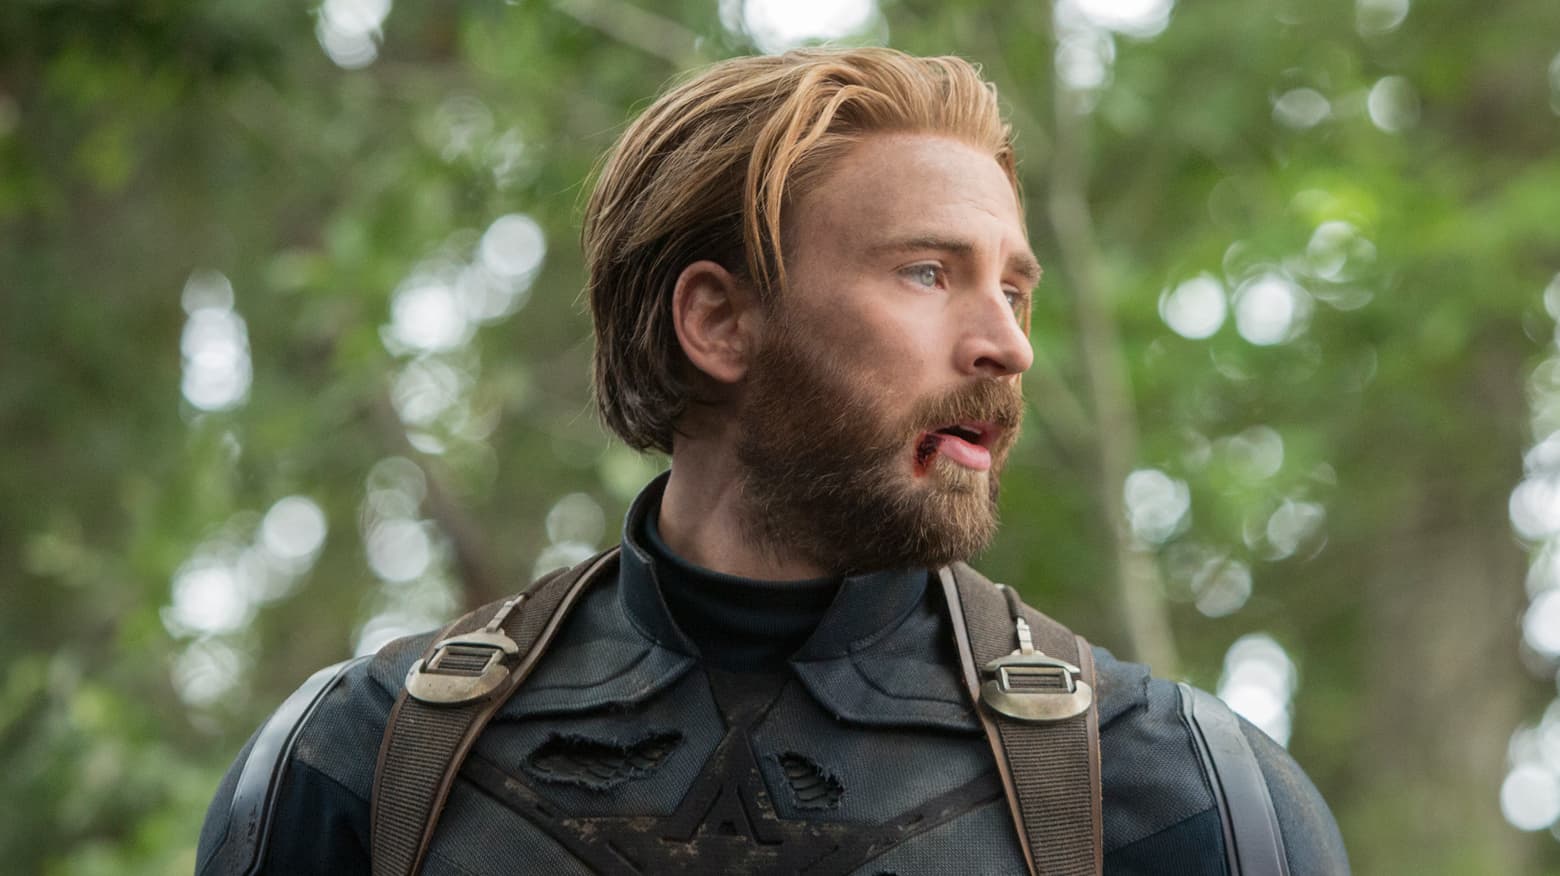 Captain America with Fugitive Beard